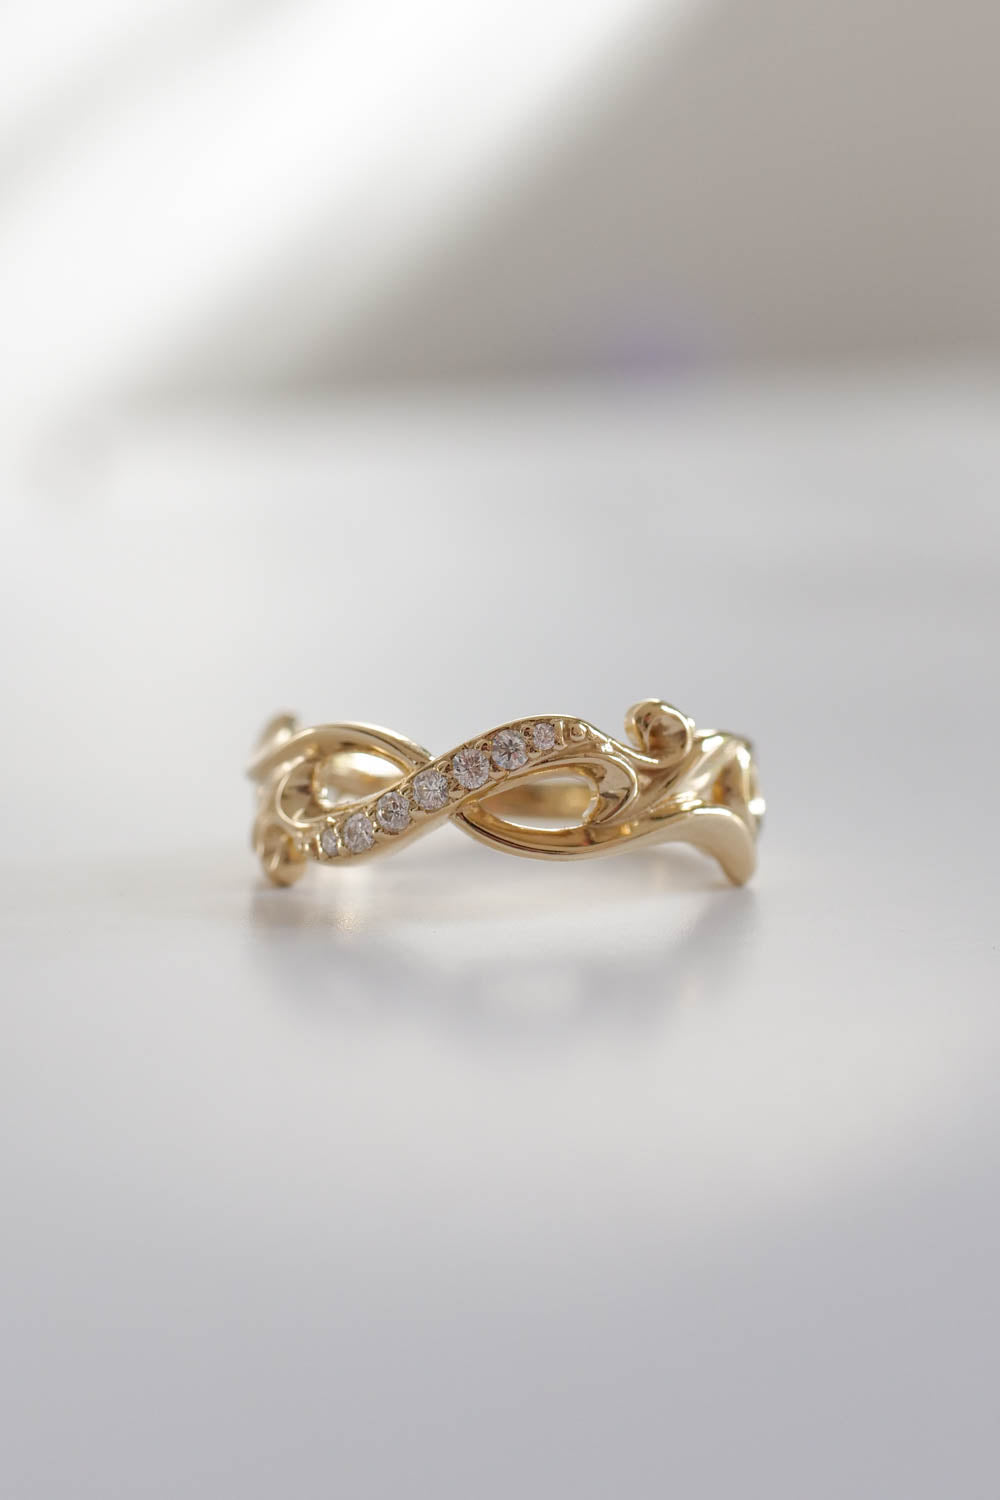 Gold wedding ring, diamonds ring for wedding, infinity ring design